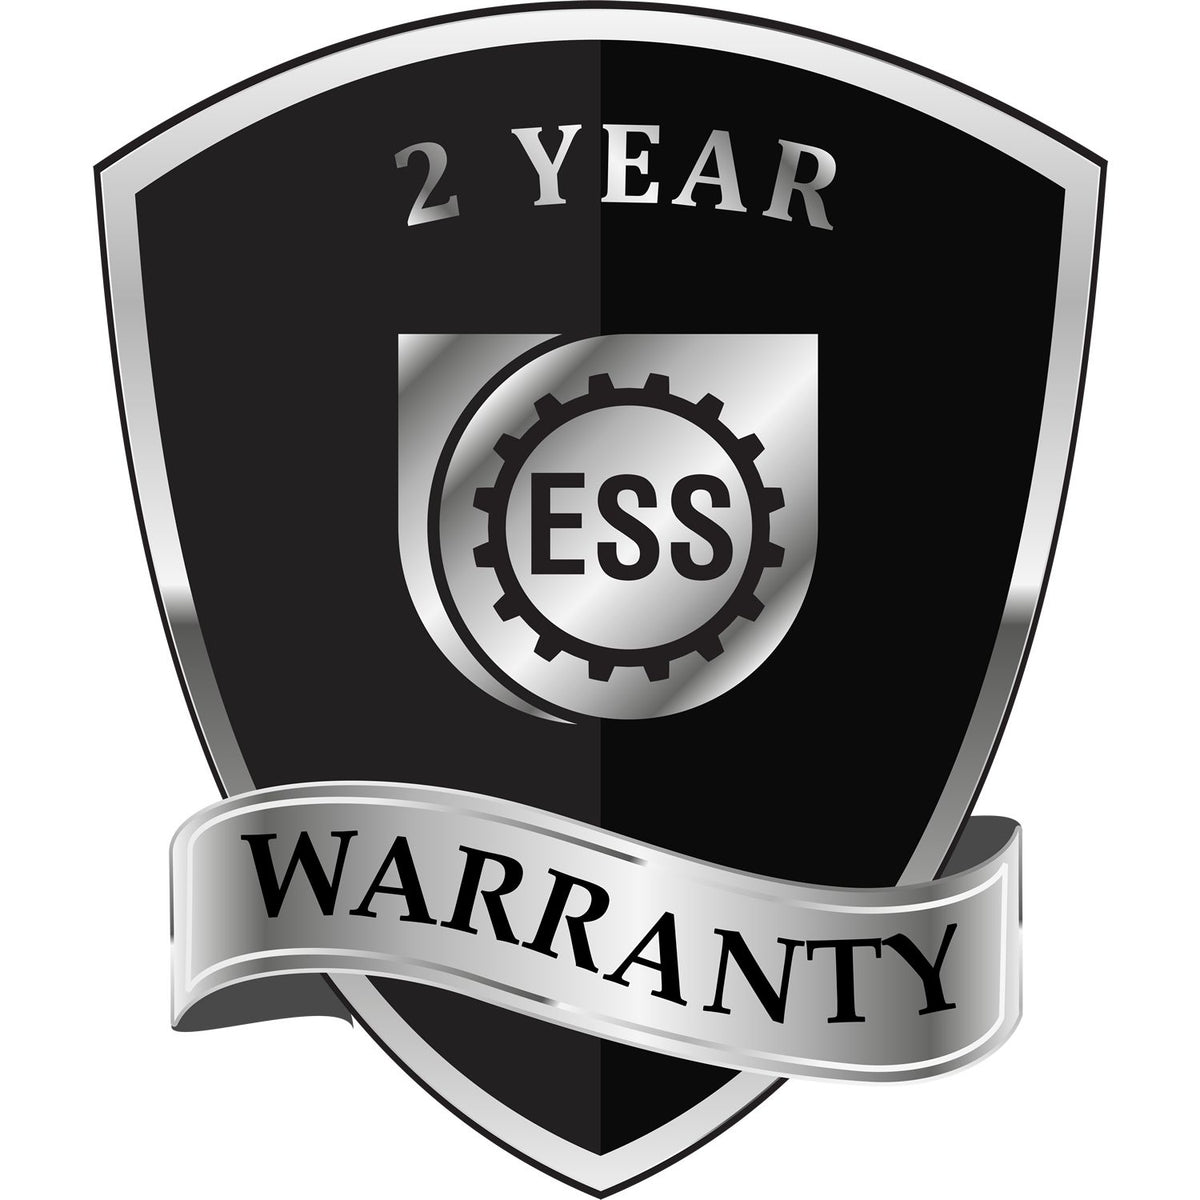 A black and silver badge or emblem showing warranty information for the Missouri Geologist Desk Seal